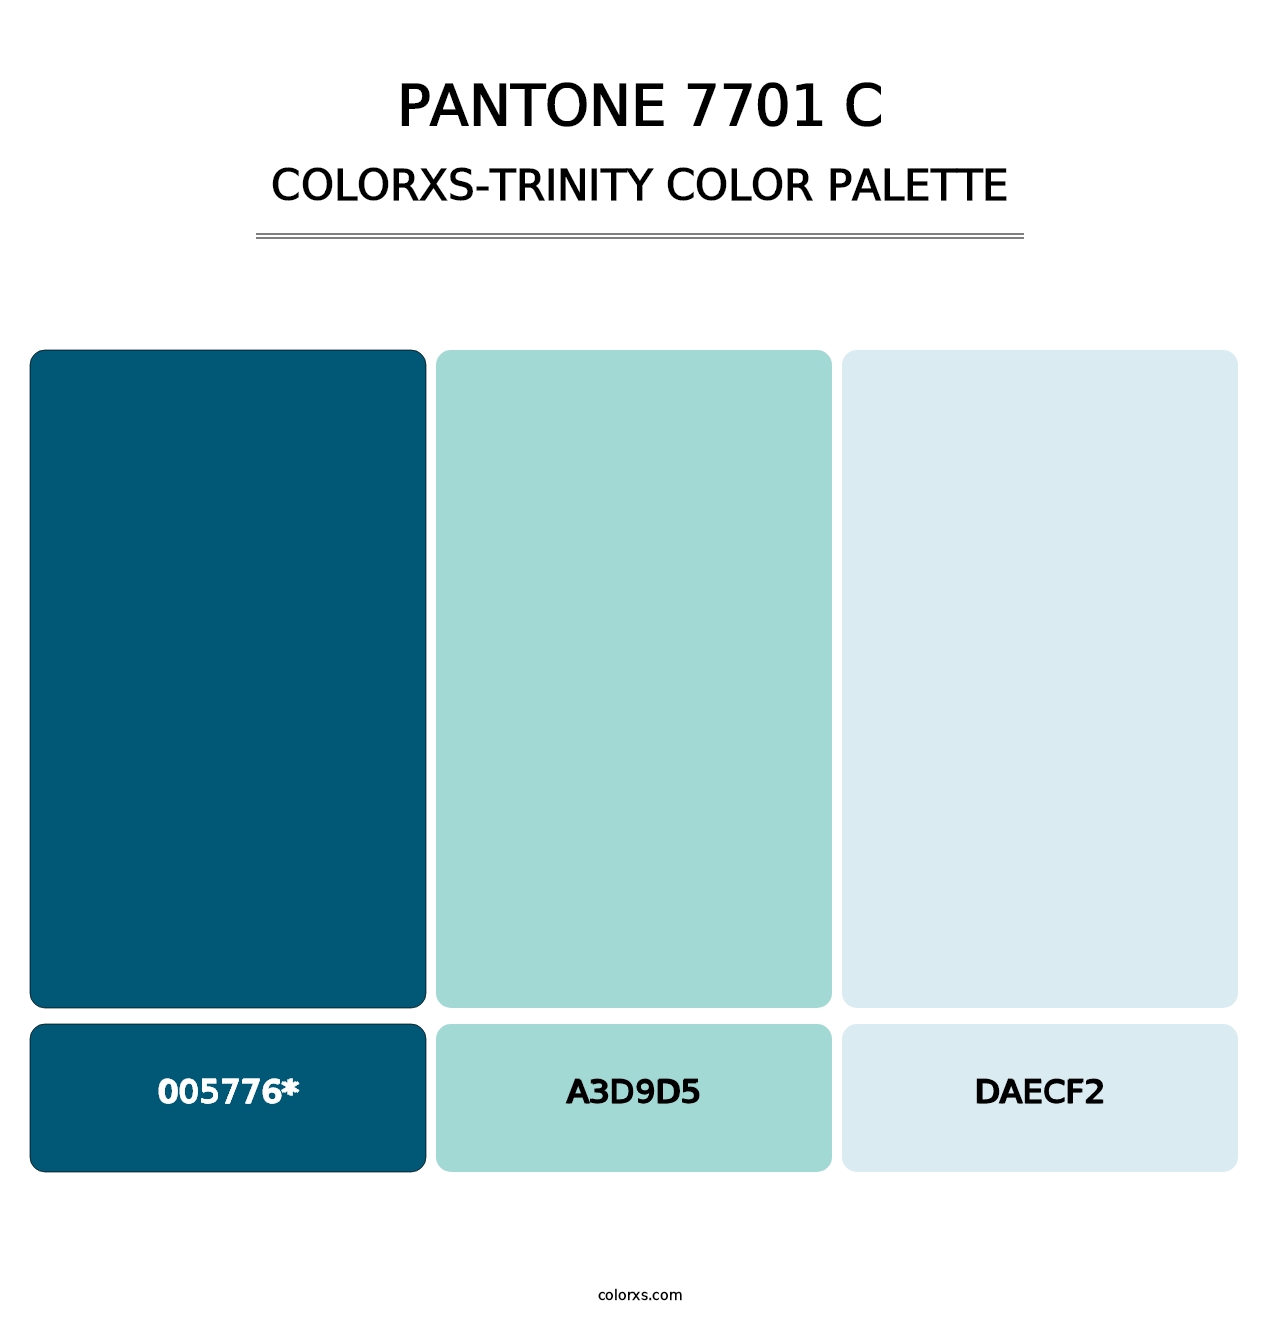 PANTONE 7701 C - Colorxs Trinity Palette